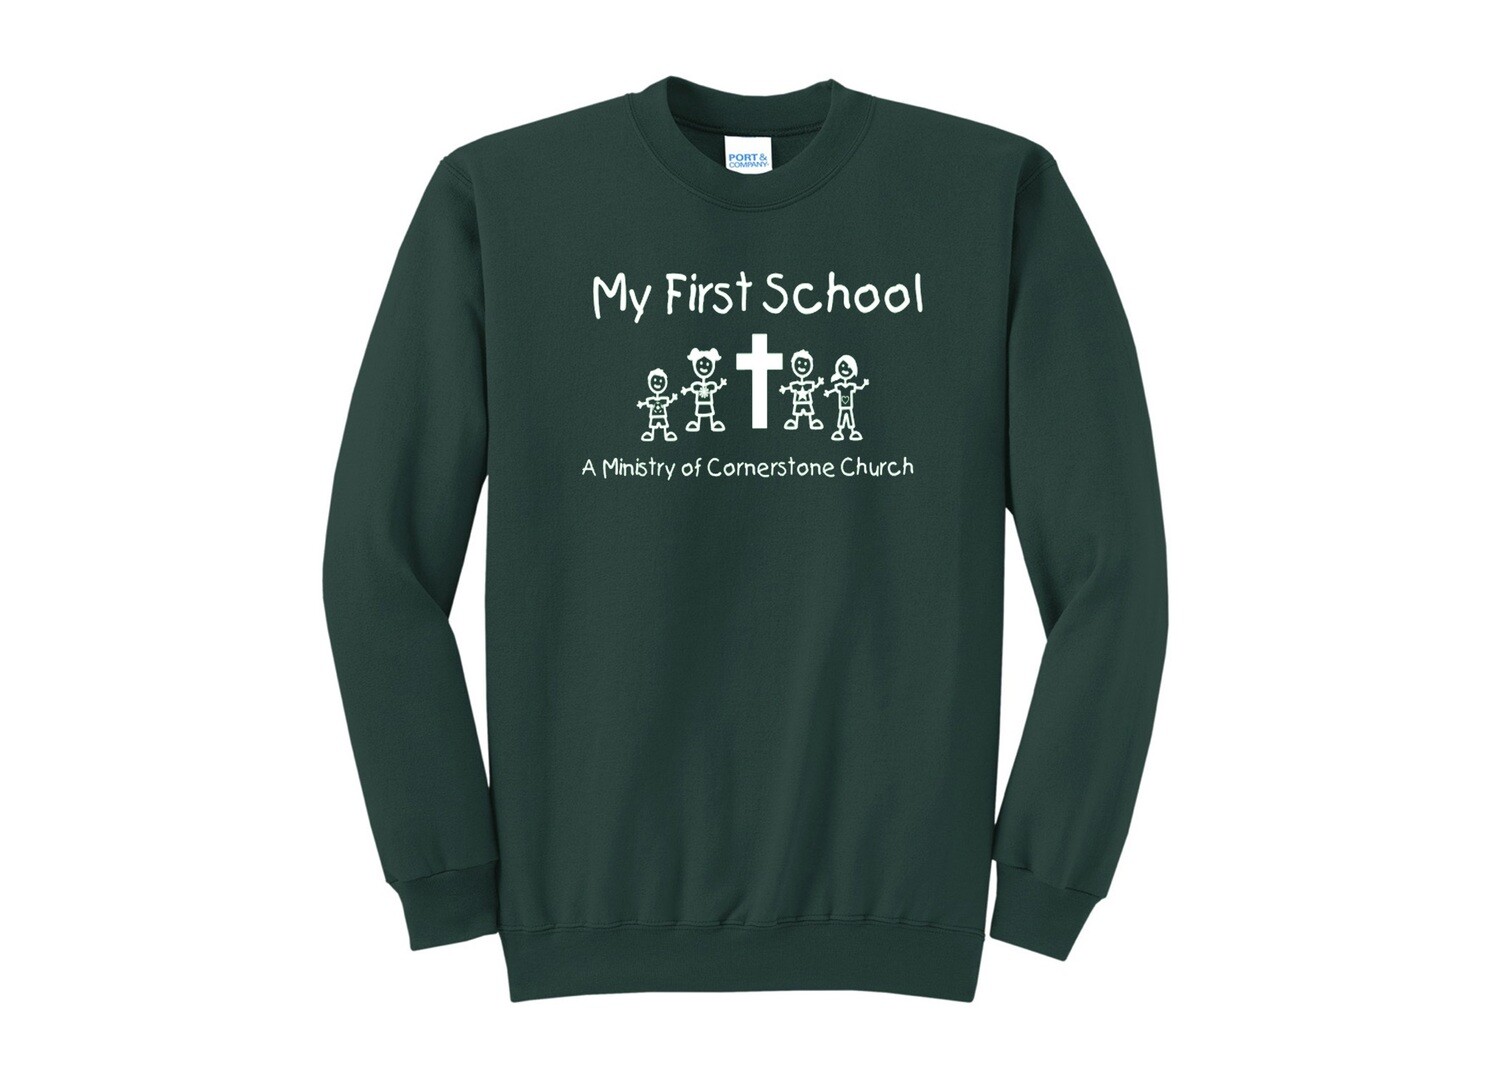 My First School Forest Green Fleece Crewneck Sweatshirt - Youth & Adult Sizes